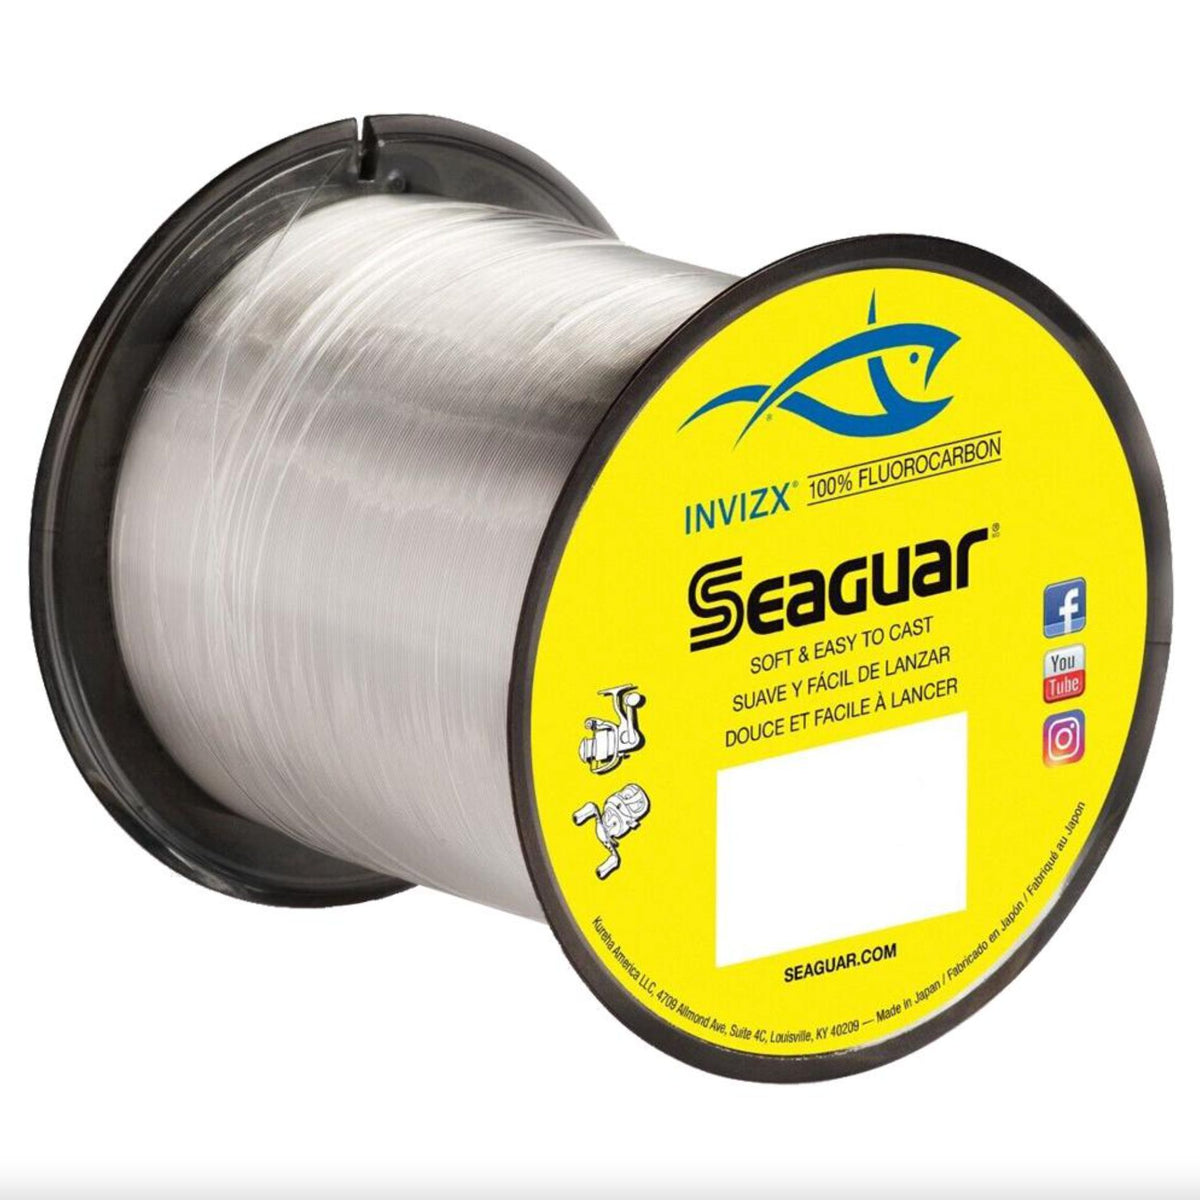 Seaguar Invizx Fluorocarbon Line 200 Yards